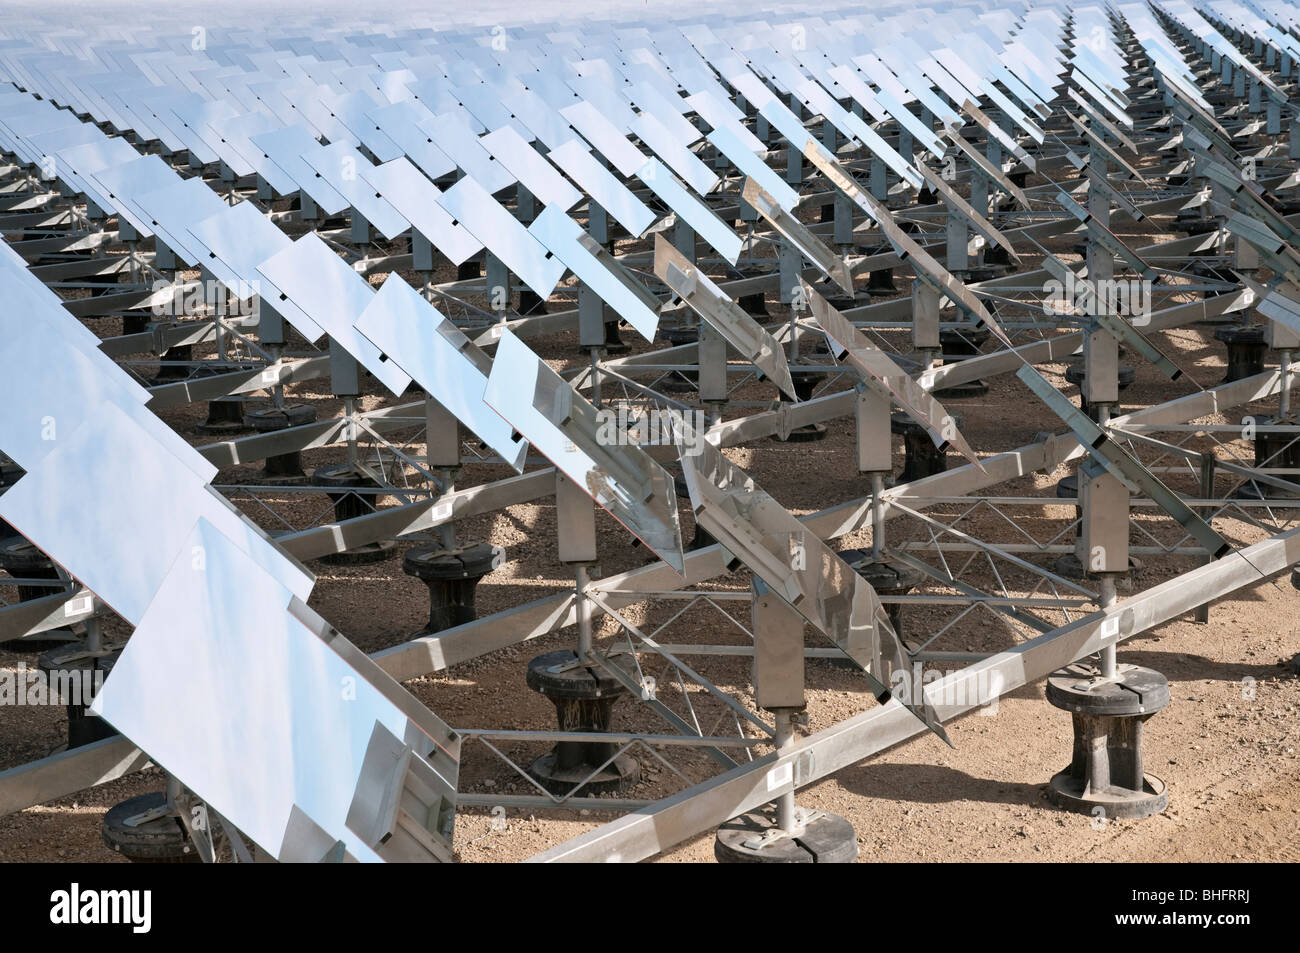 Heliostat mirrors at a solar power facility Stock Photo